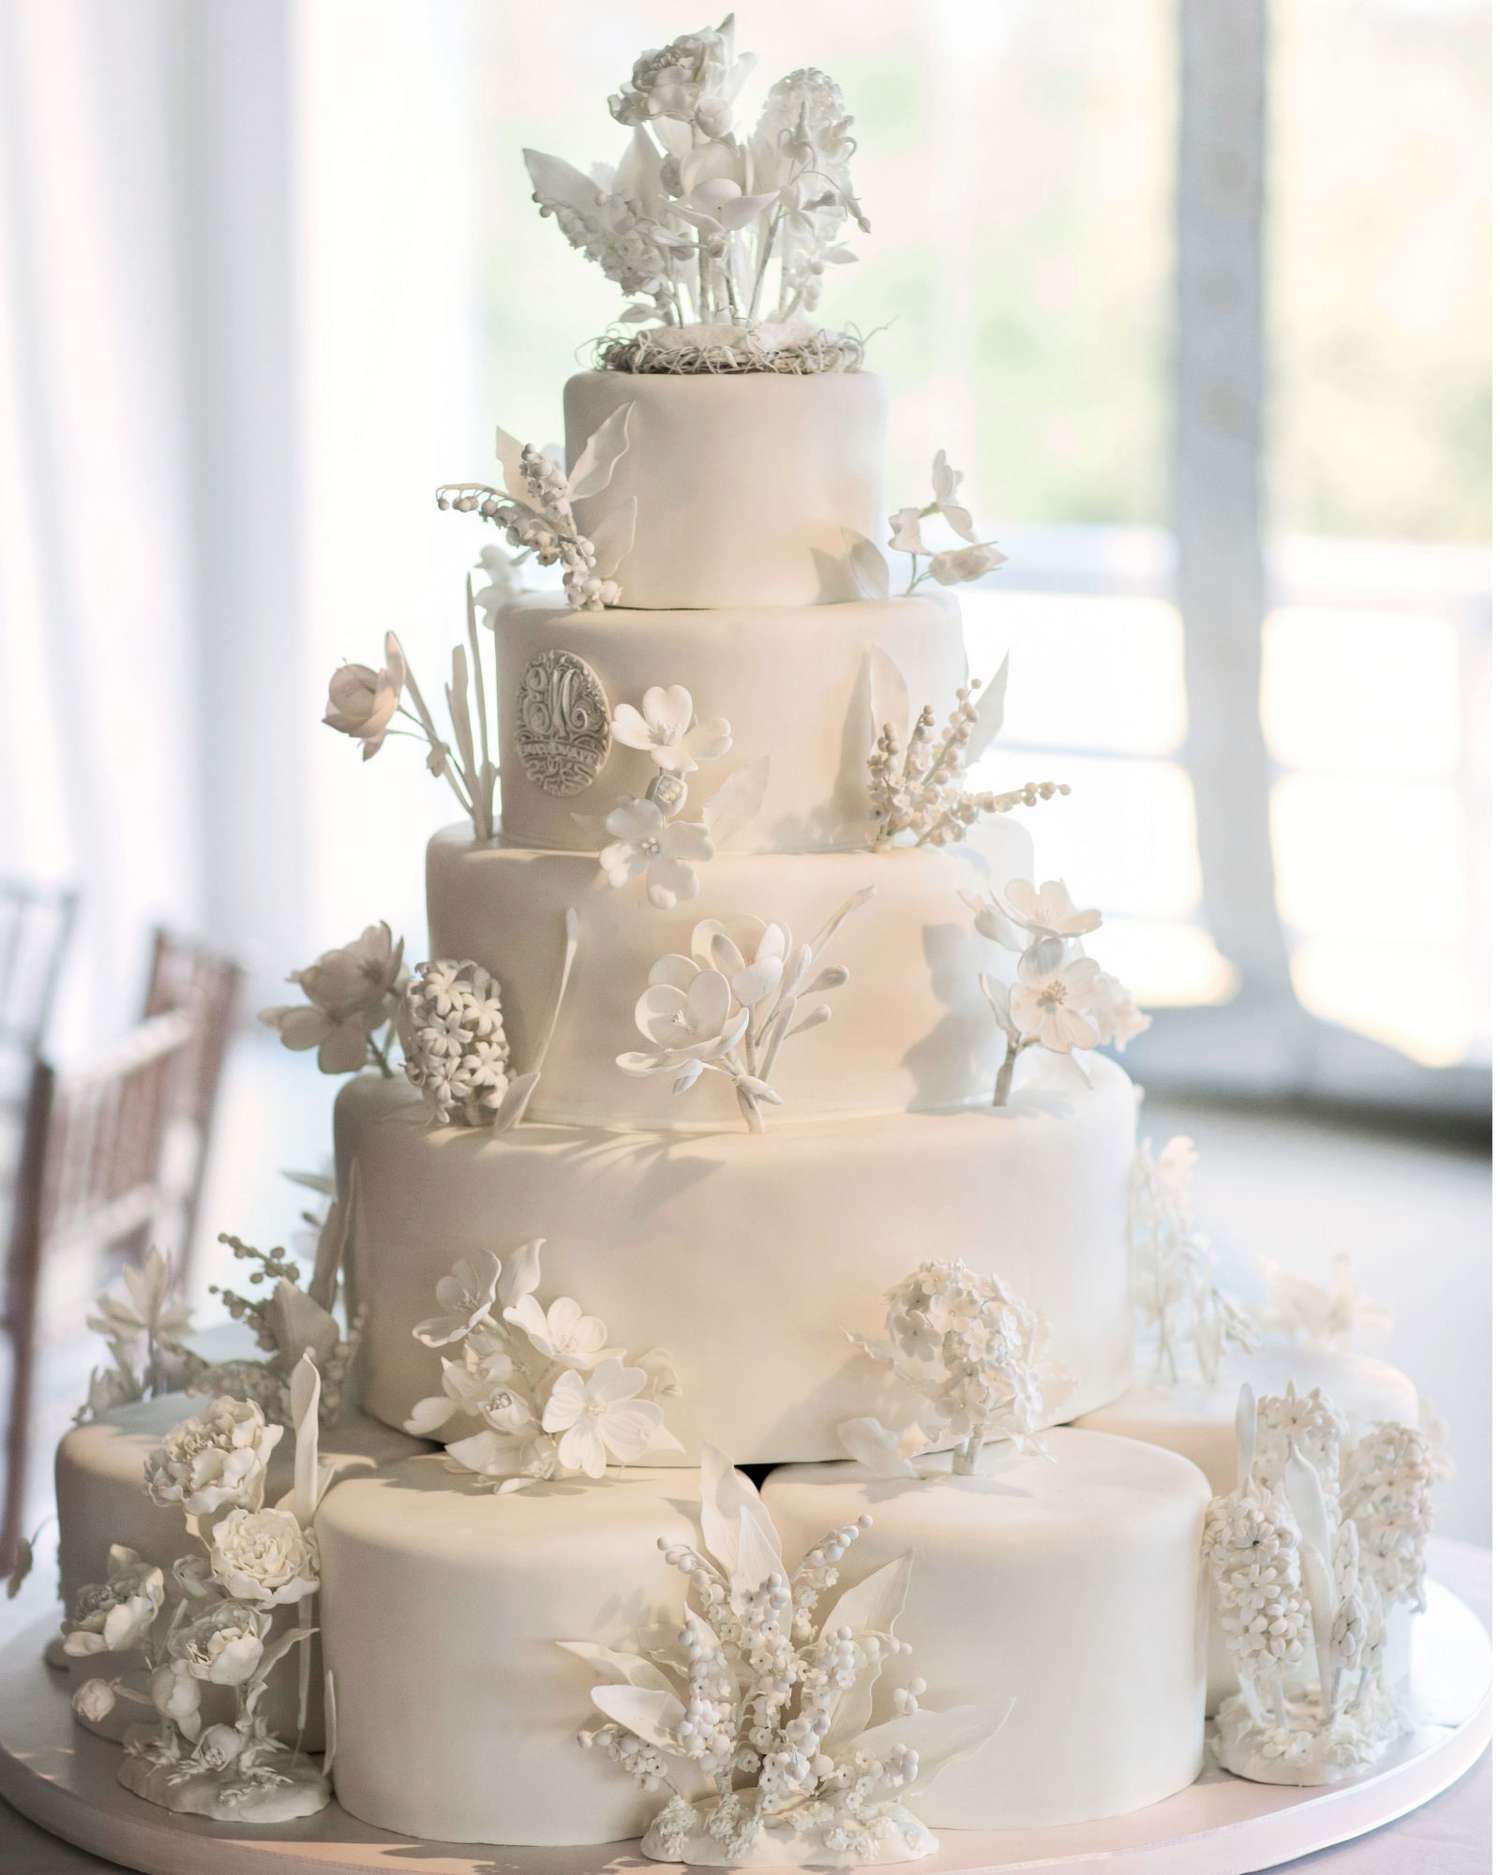 emily-matthew-wedding-cake-0124-s112720-0316.jpg